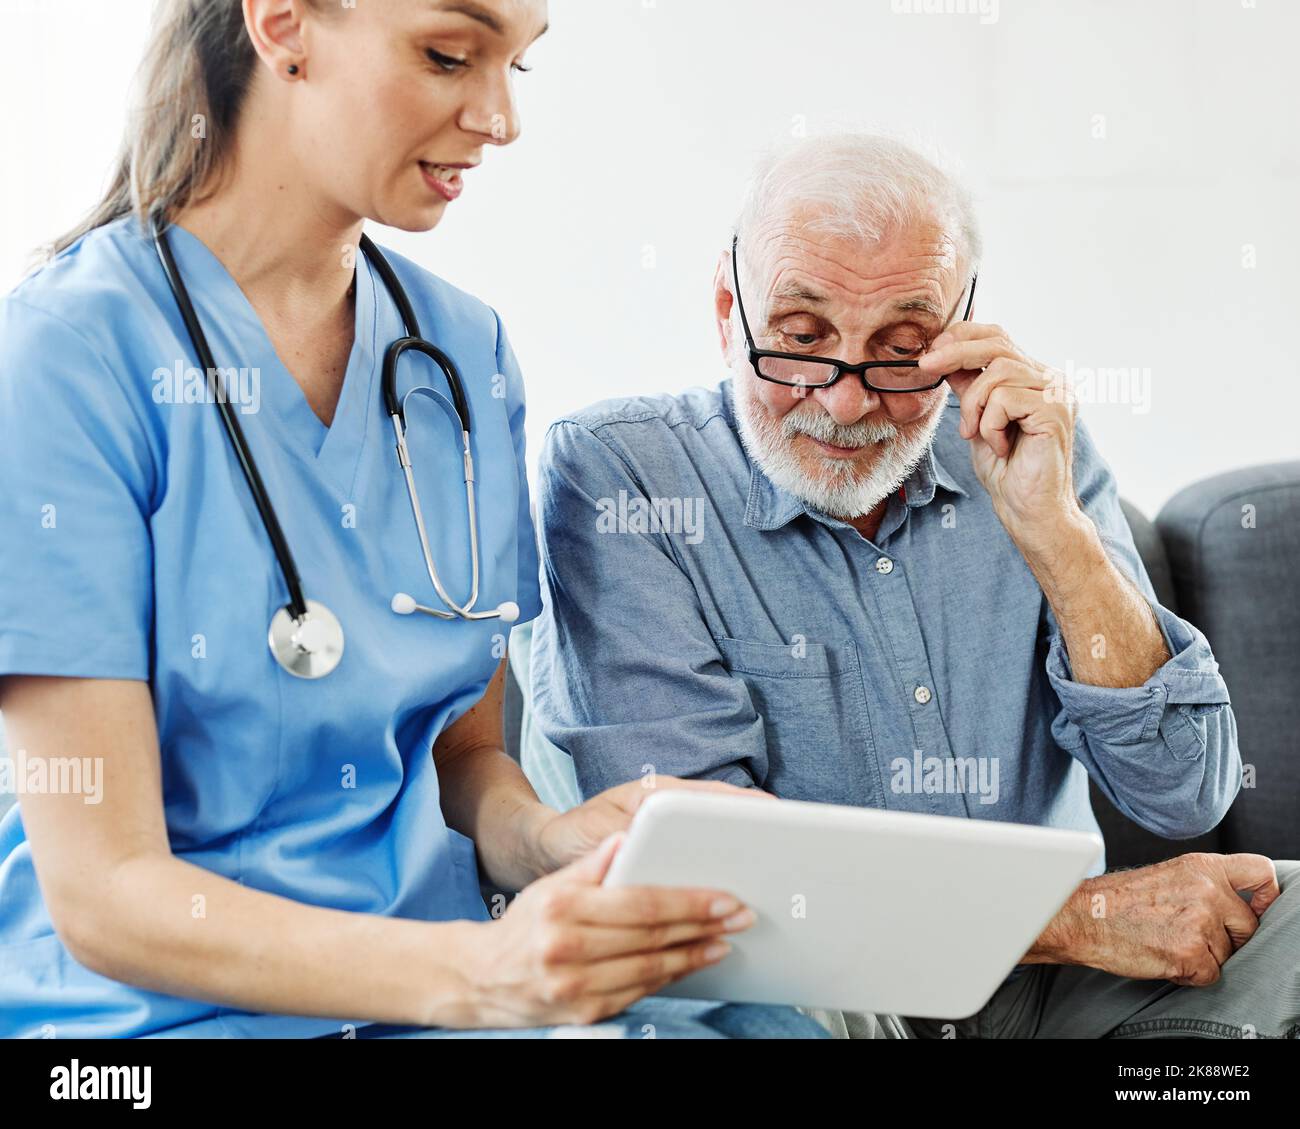 nurse doctor senior care tablet computer technology showing caregiver help assistence retirement home nursing elderly man Stock Photo